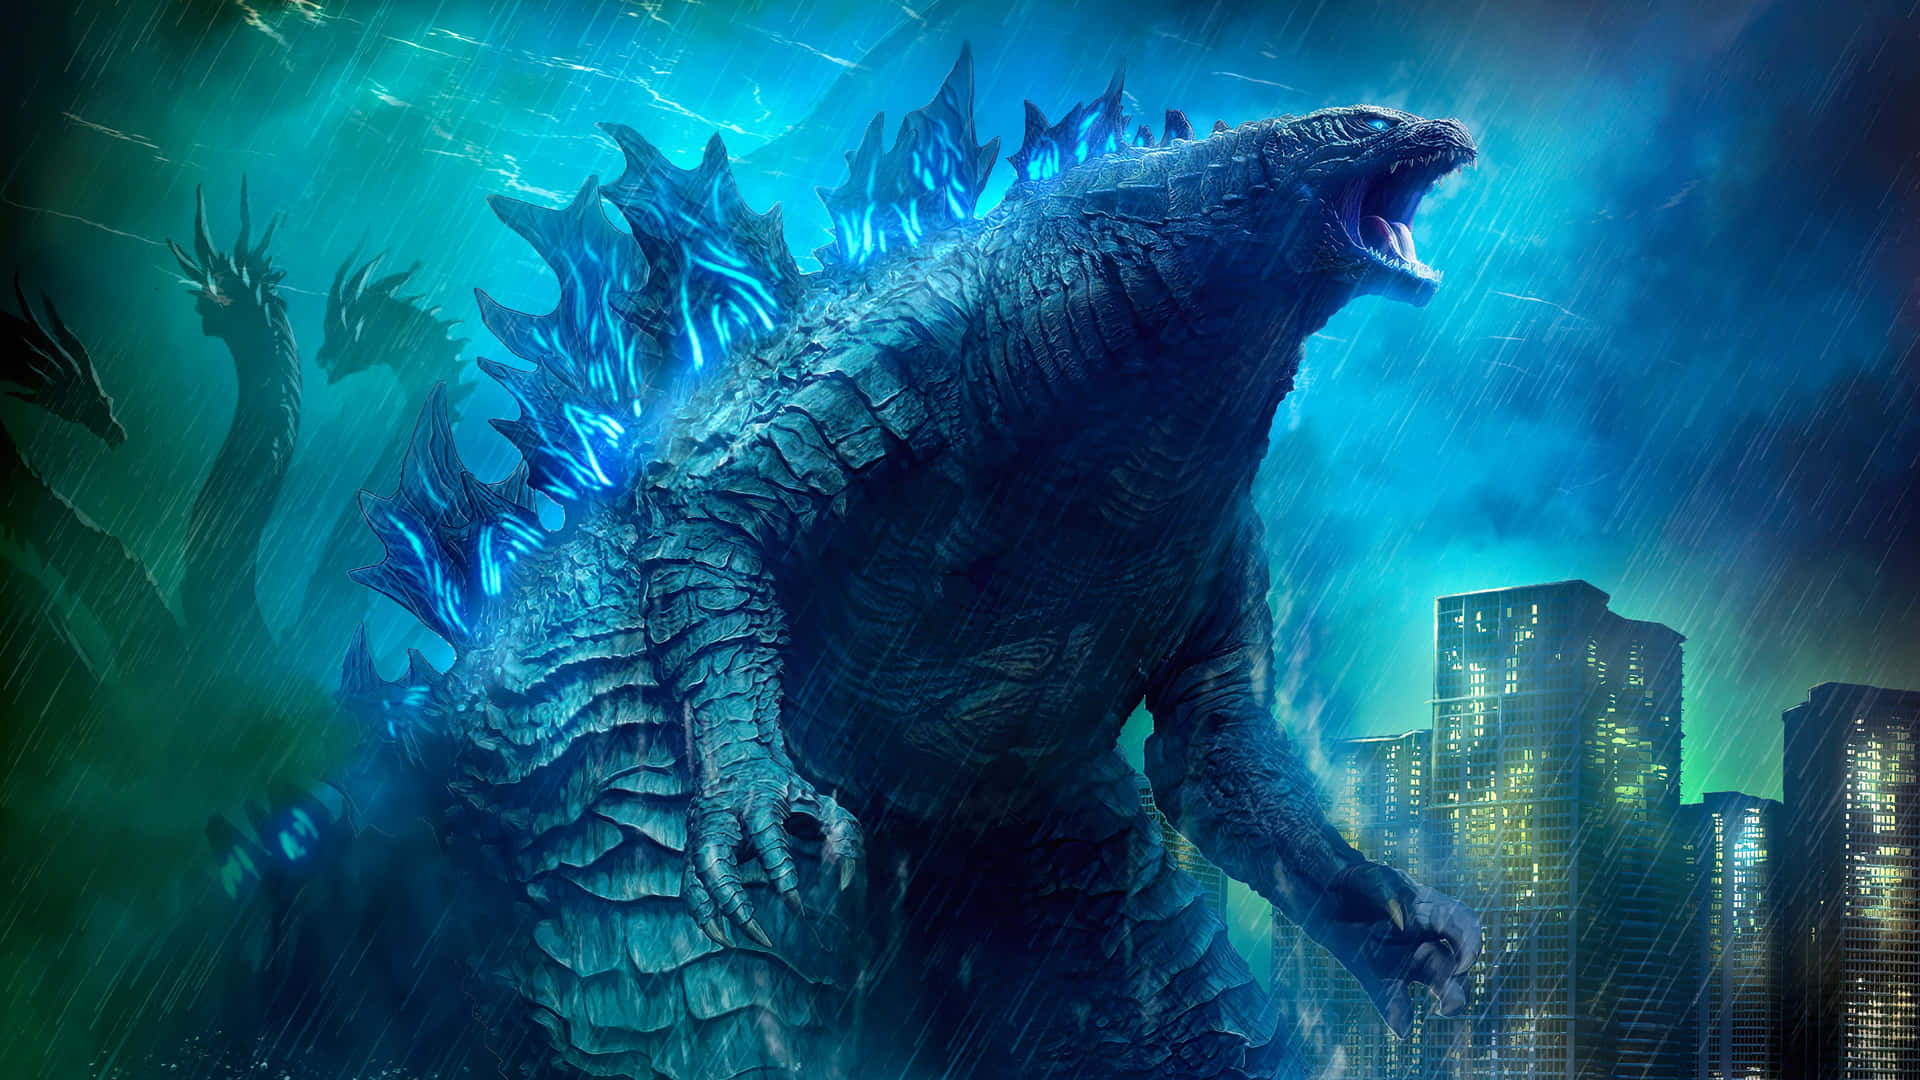 100+] Godzilla Background s 